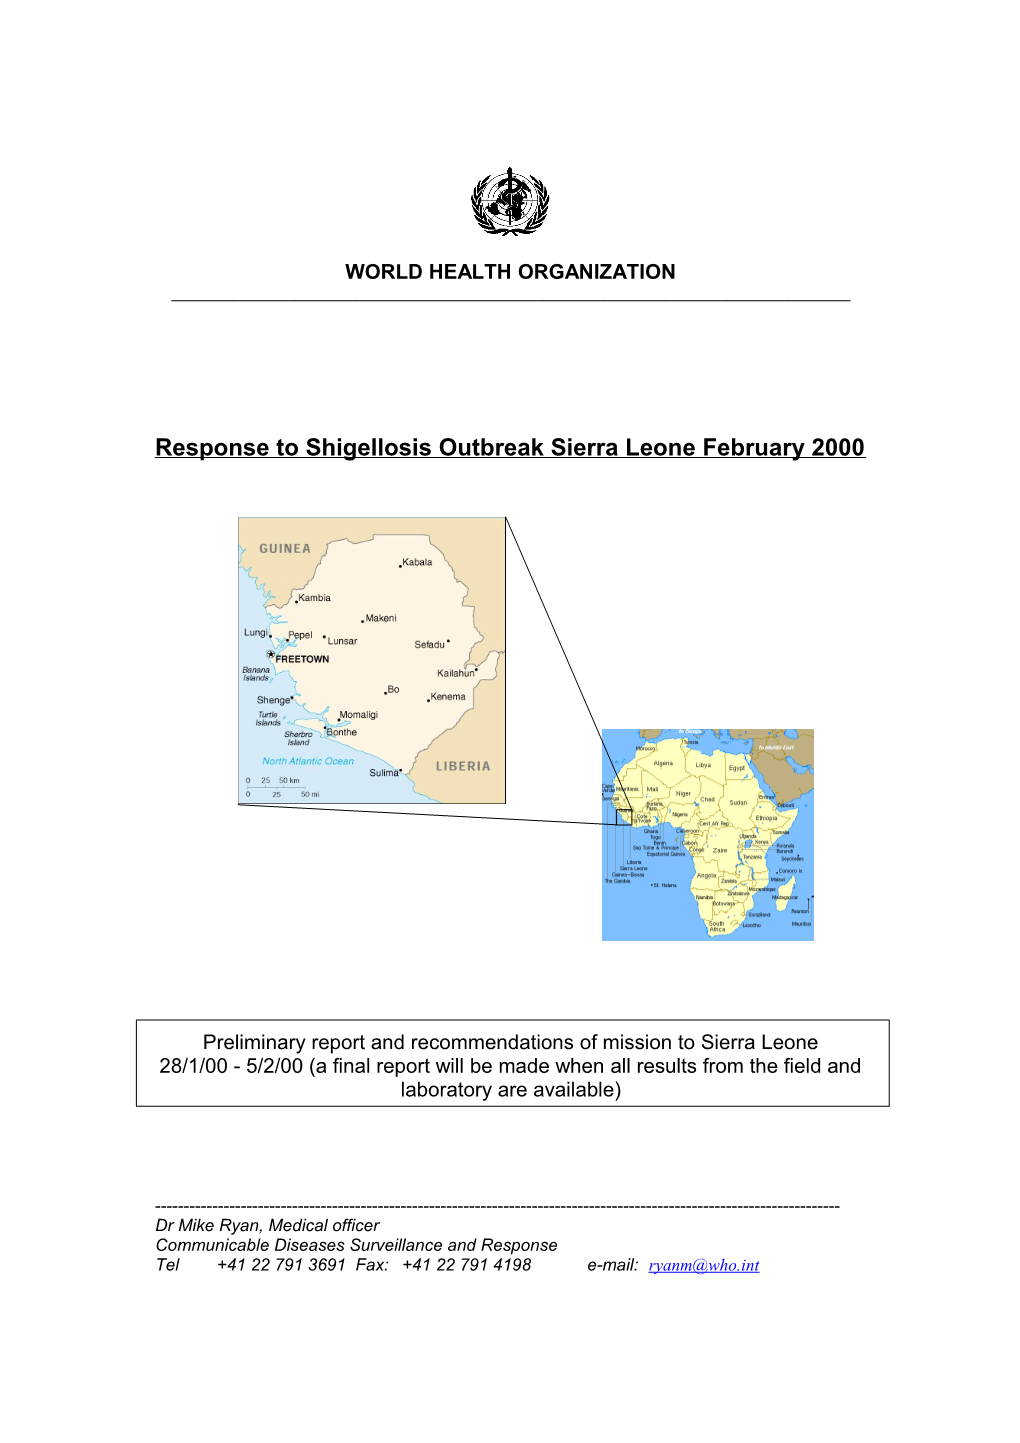 Field Investigation of Shigellosis Outbreak in Sierra Leone February 2000